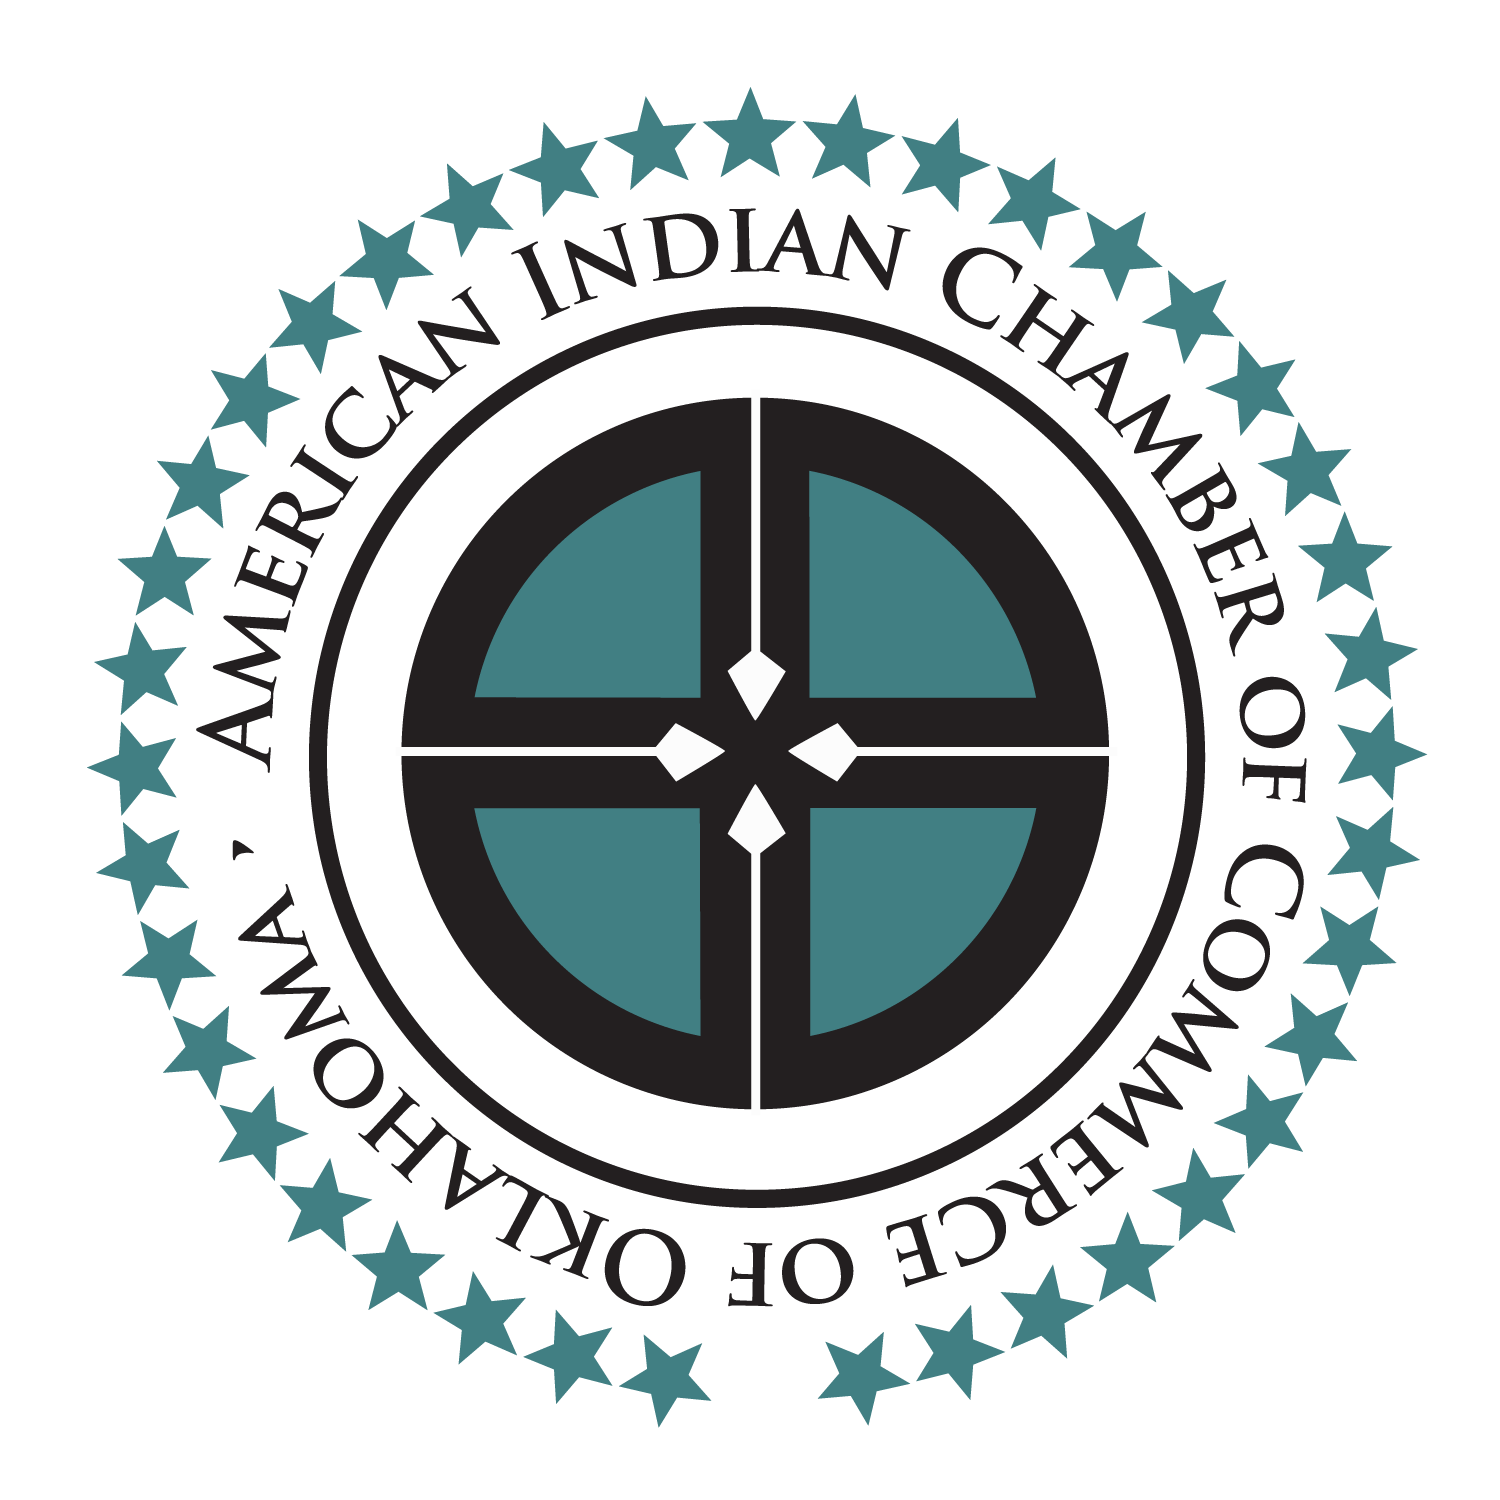 aicco badge logo 1-01